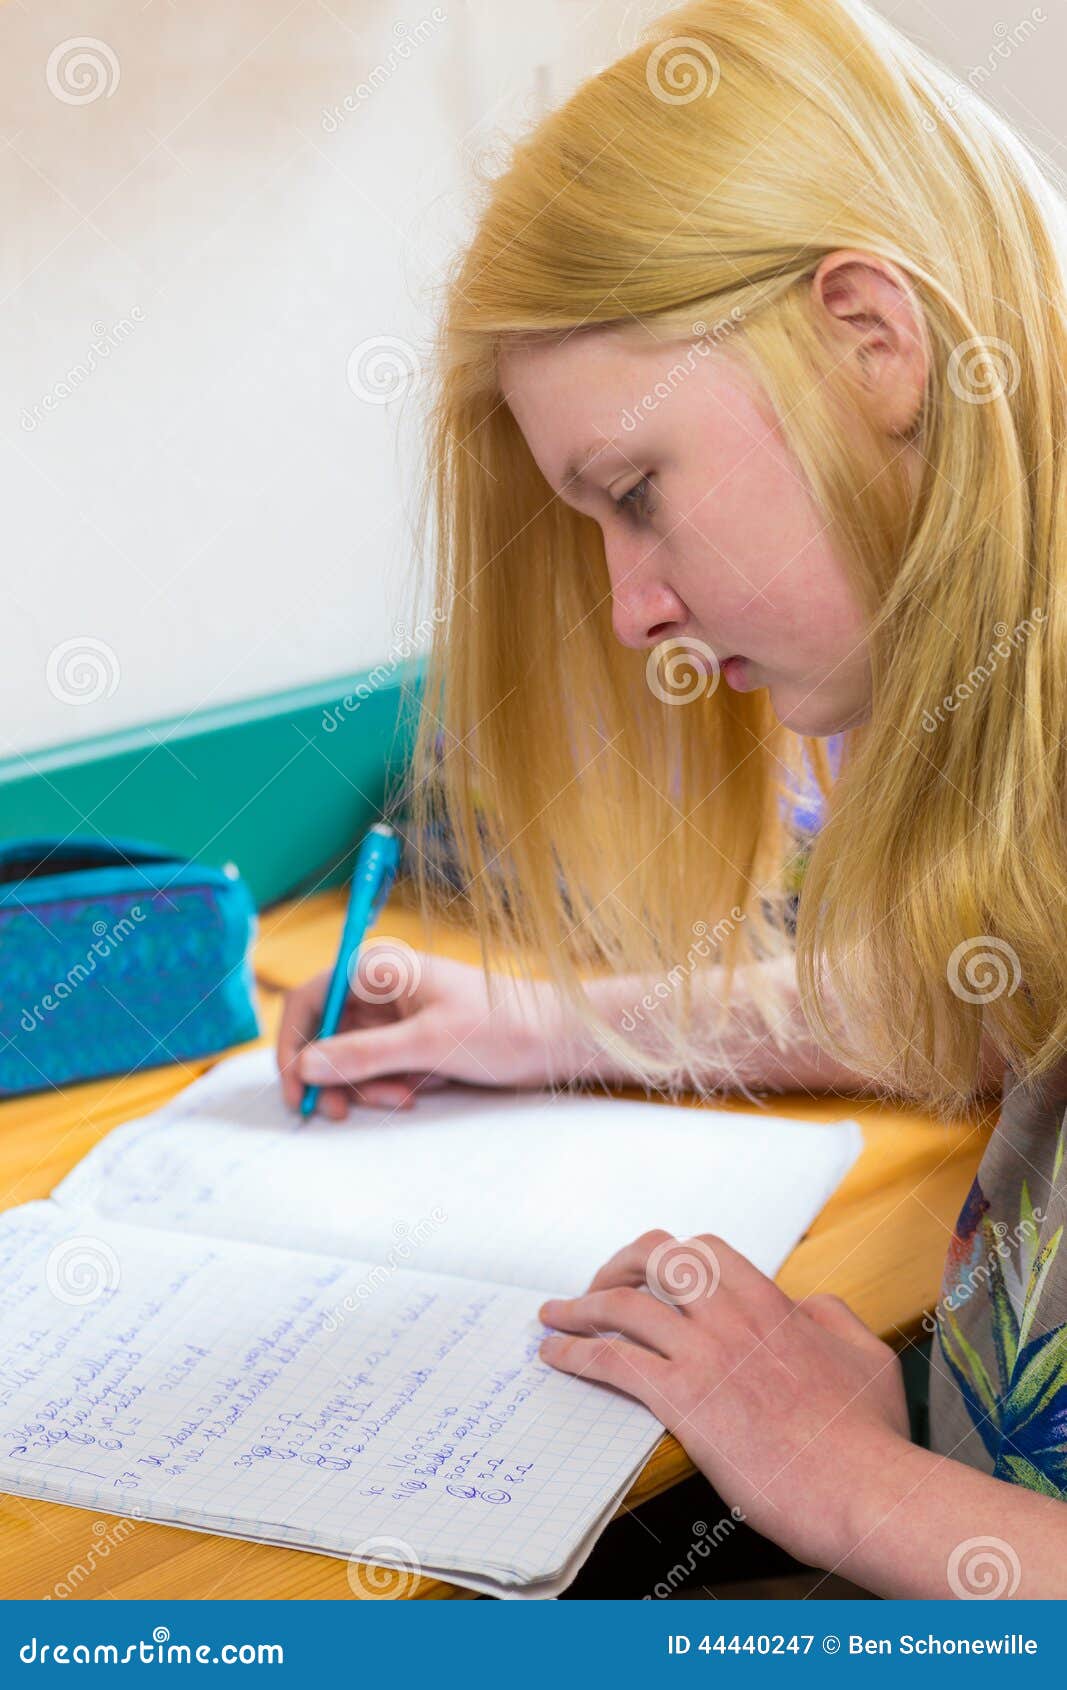 blonde schoolgirl making homework